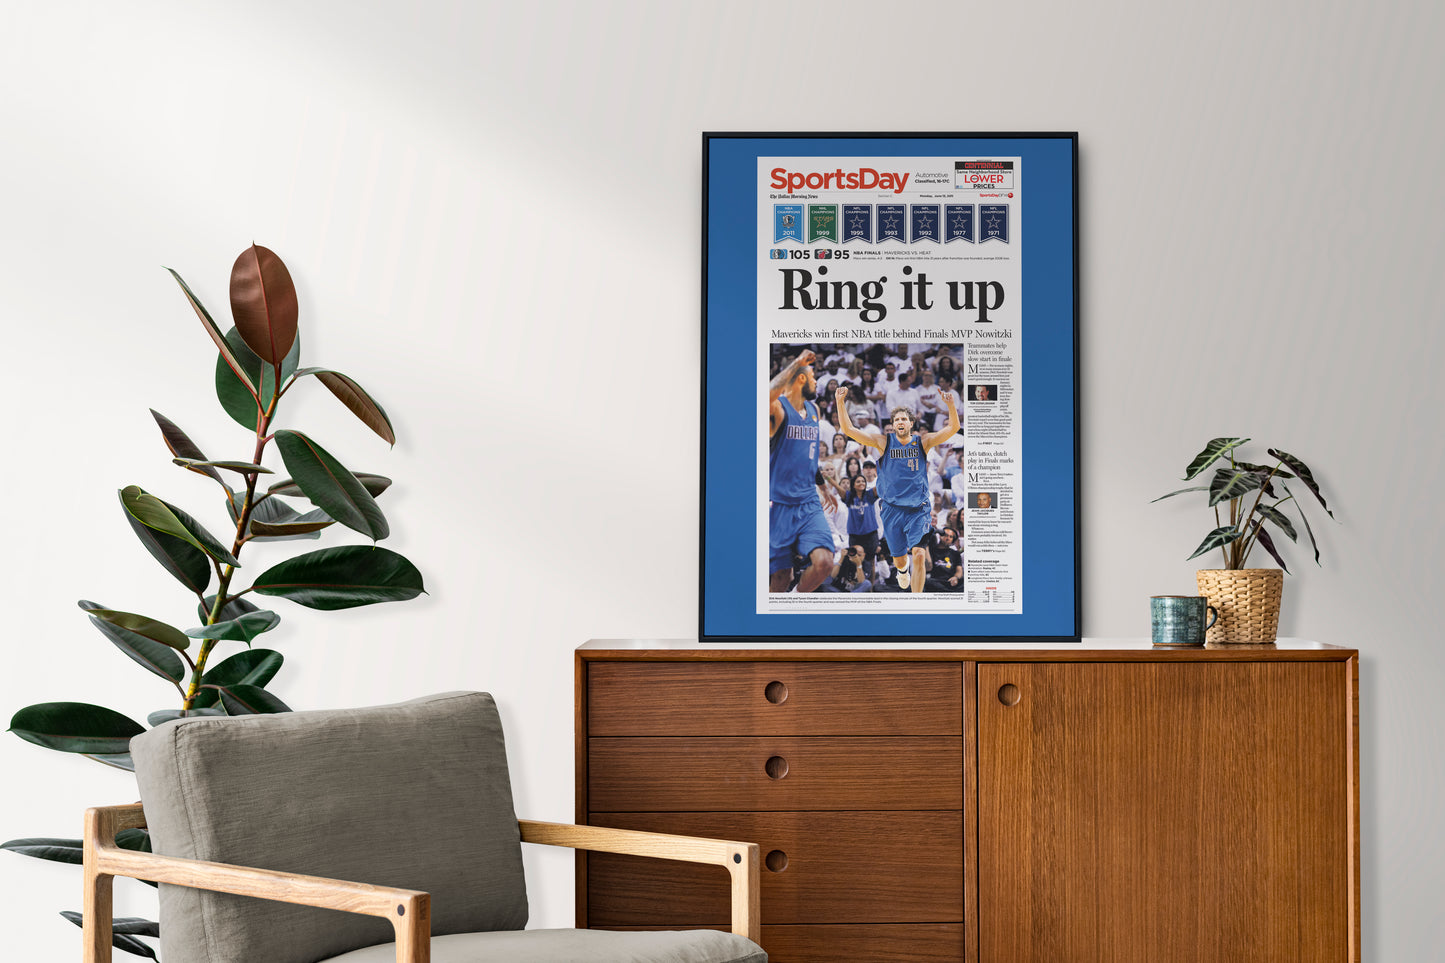 Dallas Mavericks 2011 NBA Champions Front Cover The Dallas Morning News Newspaper Poster